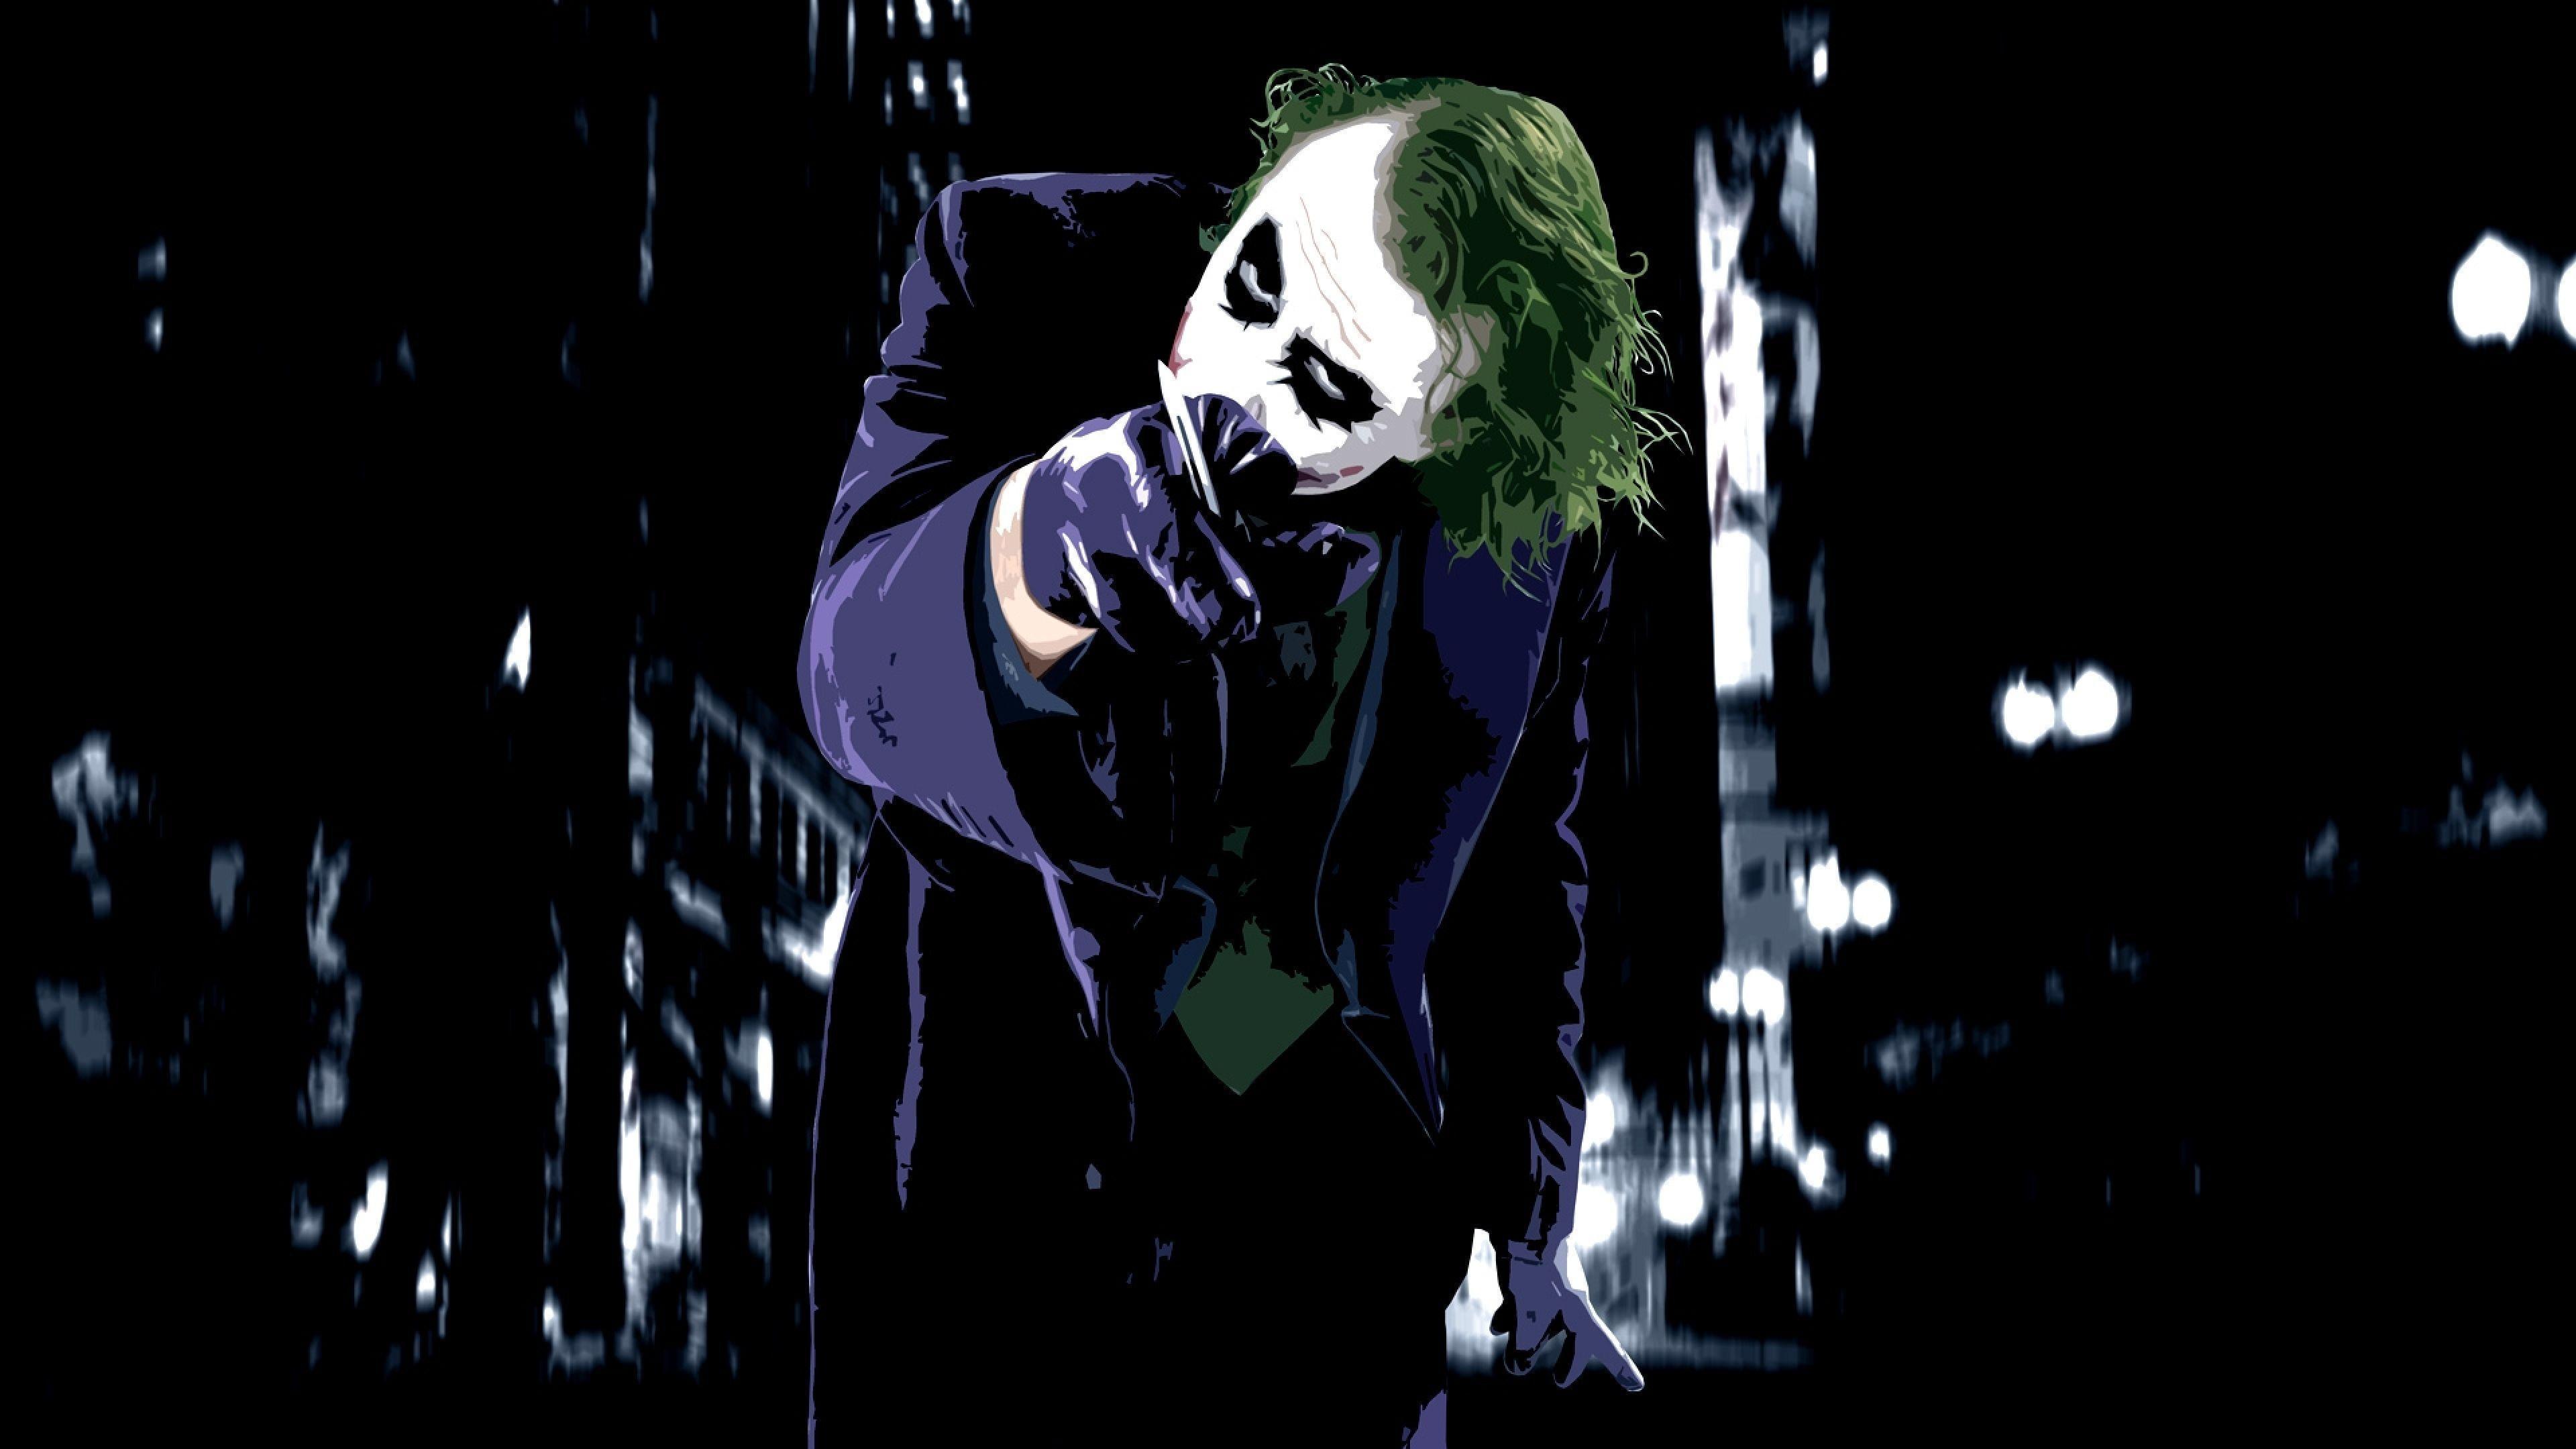 Joker Wallpaper 4K Download For Pc The Dark Knight 4k, HD Movies, 4k Wallpaper, Image